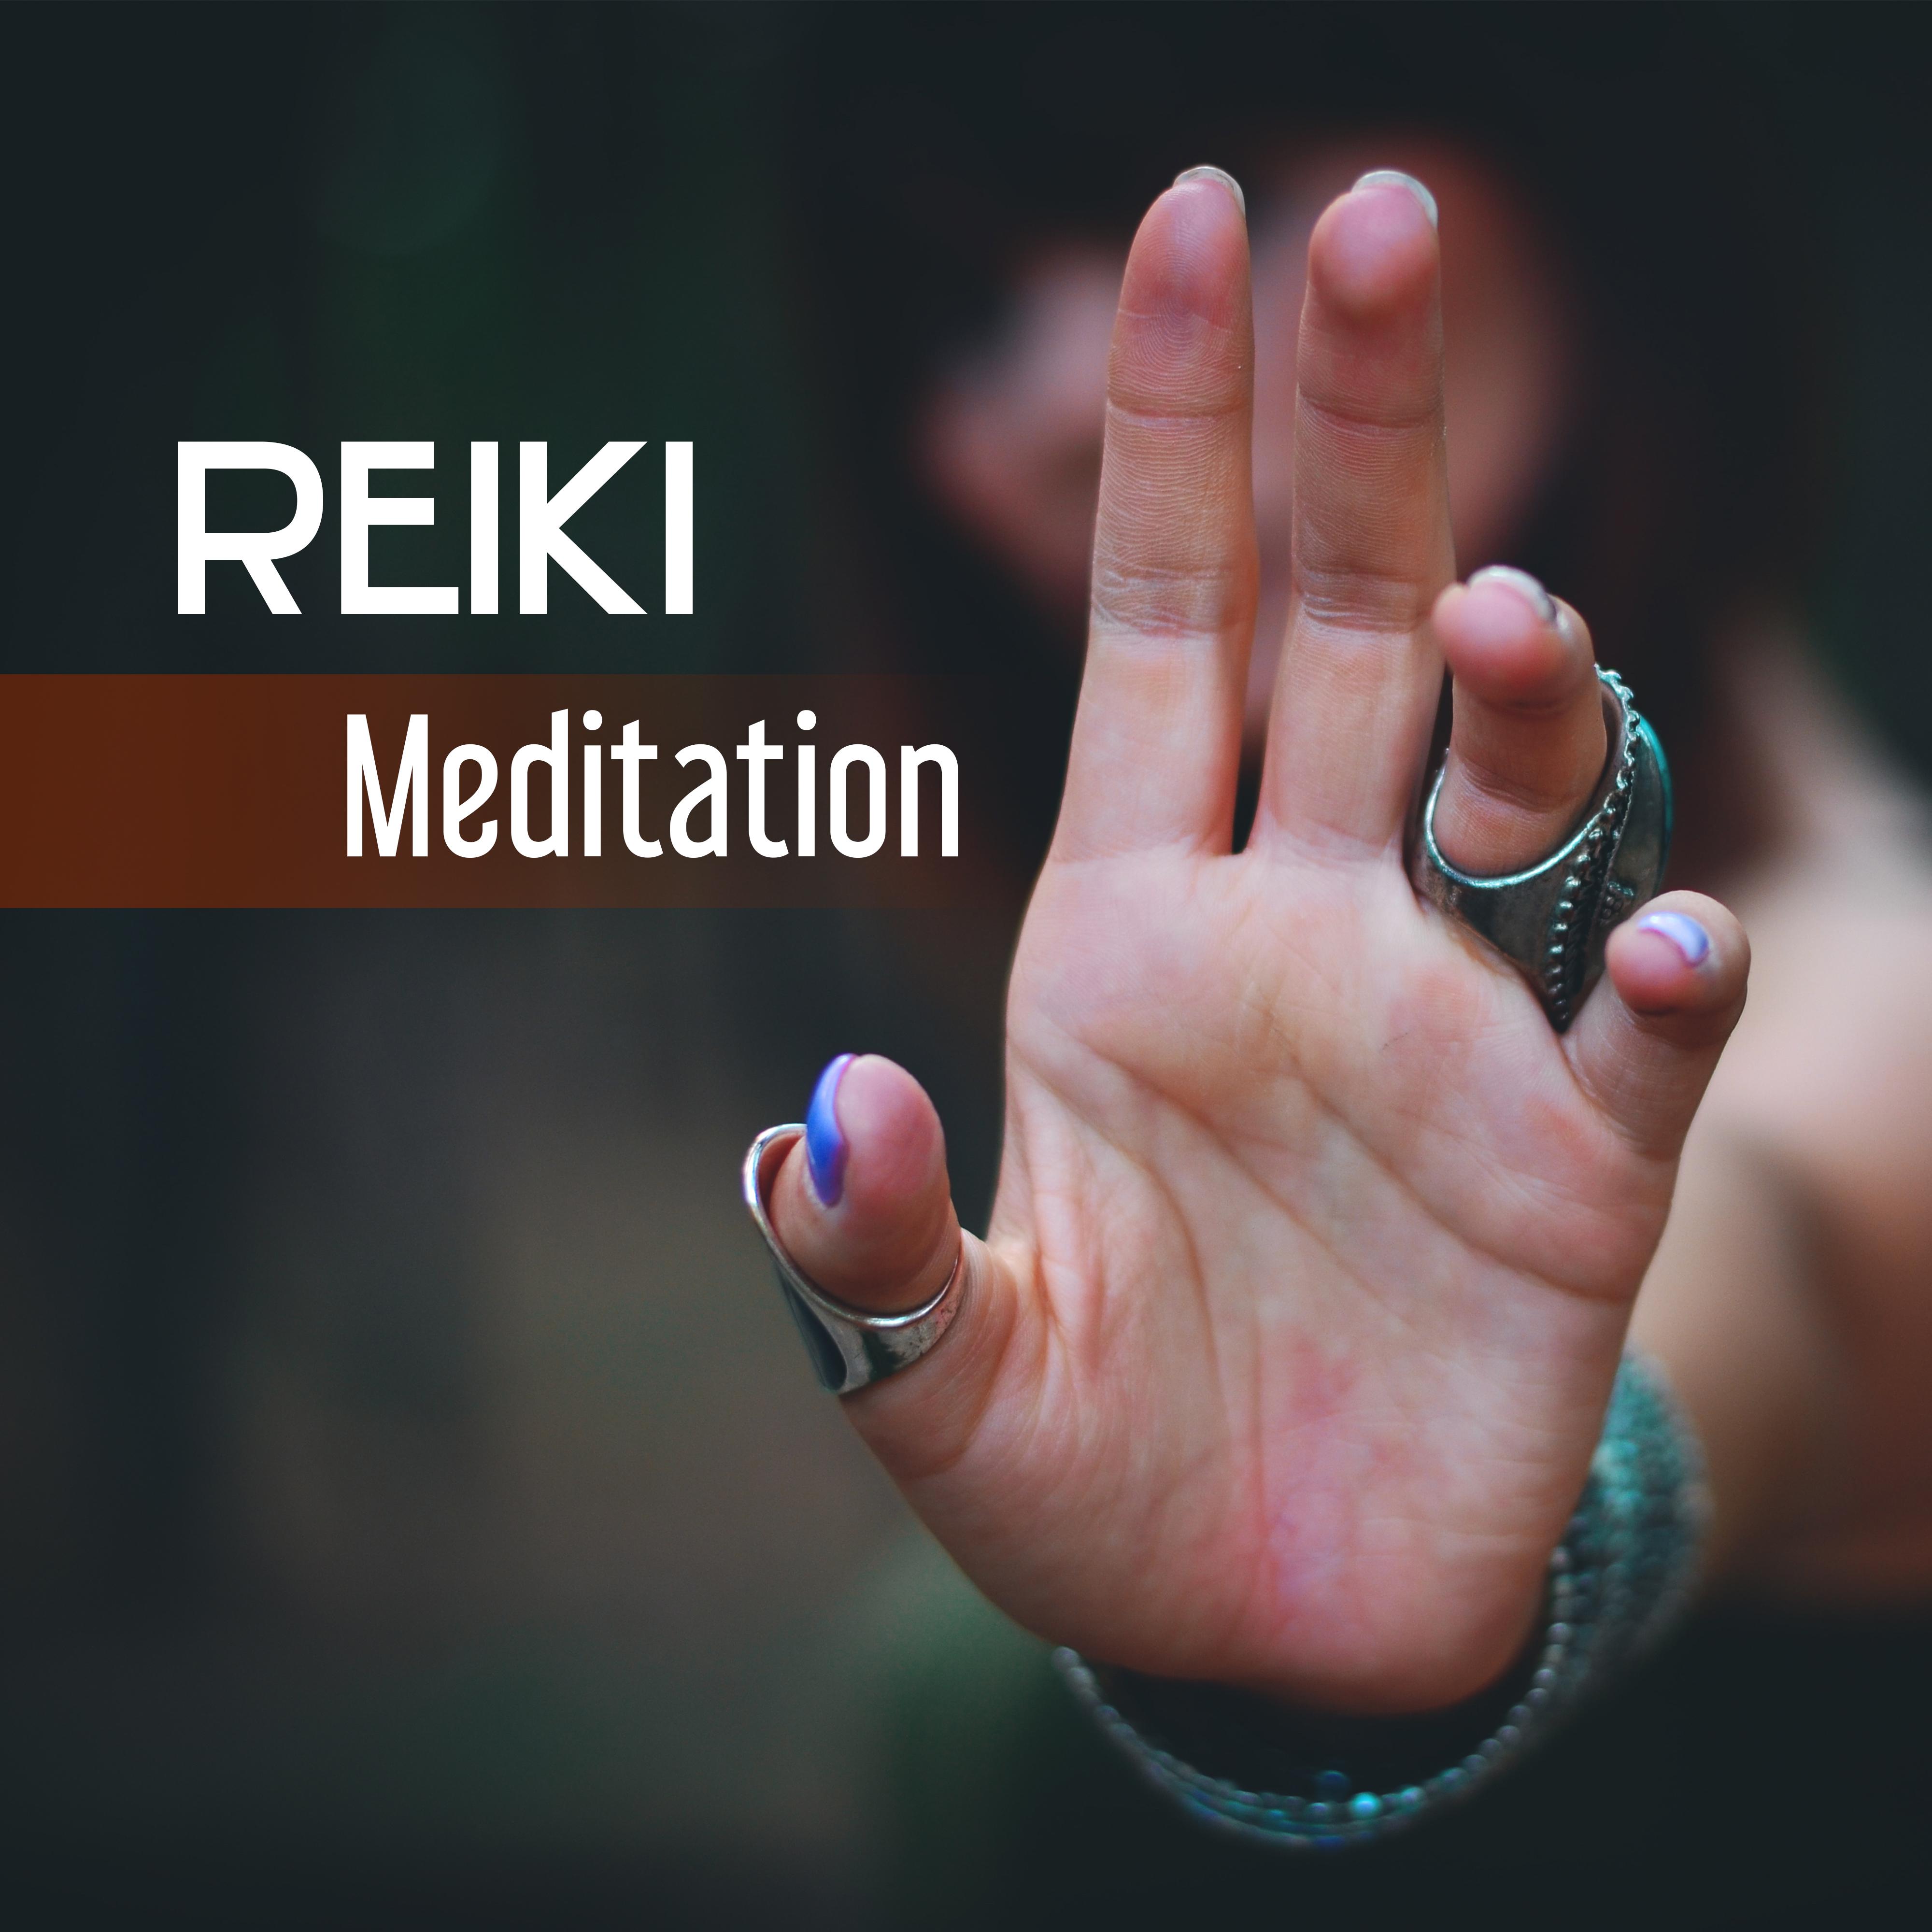 Reiki Meditation  New Age for Meditation, Yoga at Home, Feel Spirit of Tibet, Deep Relaxation